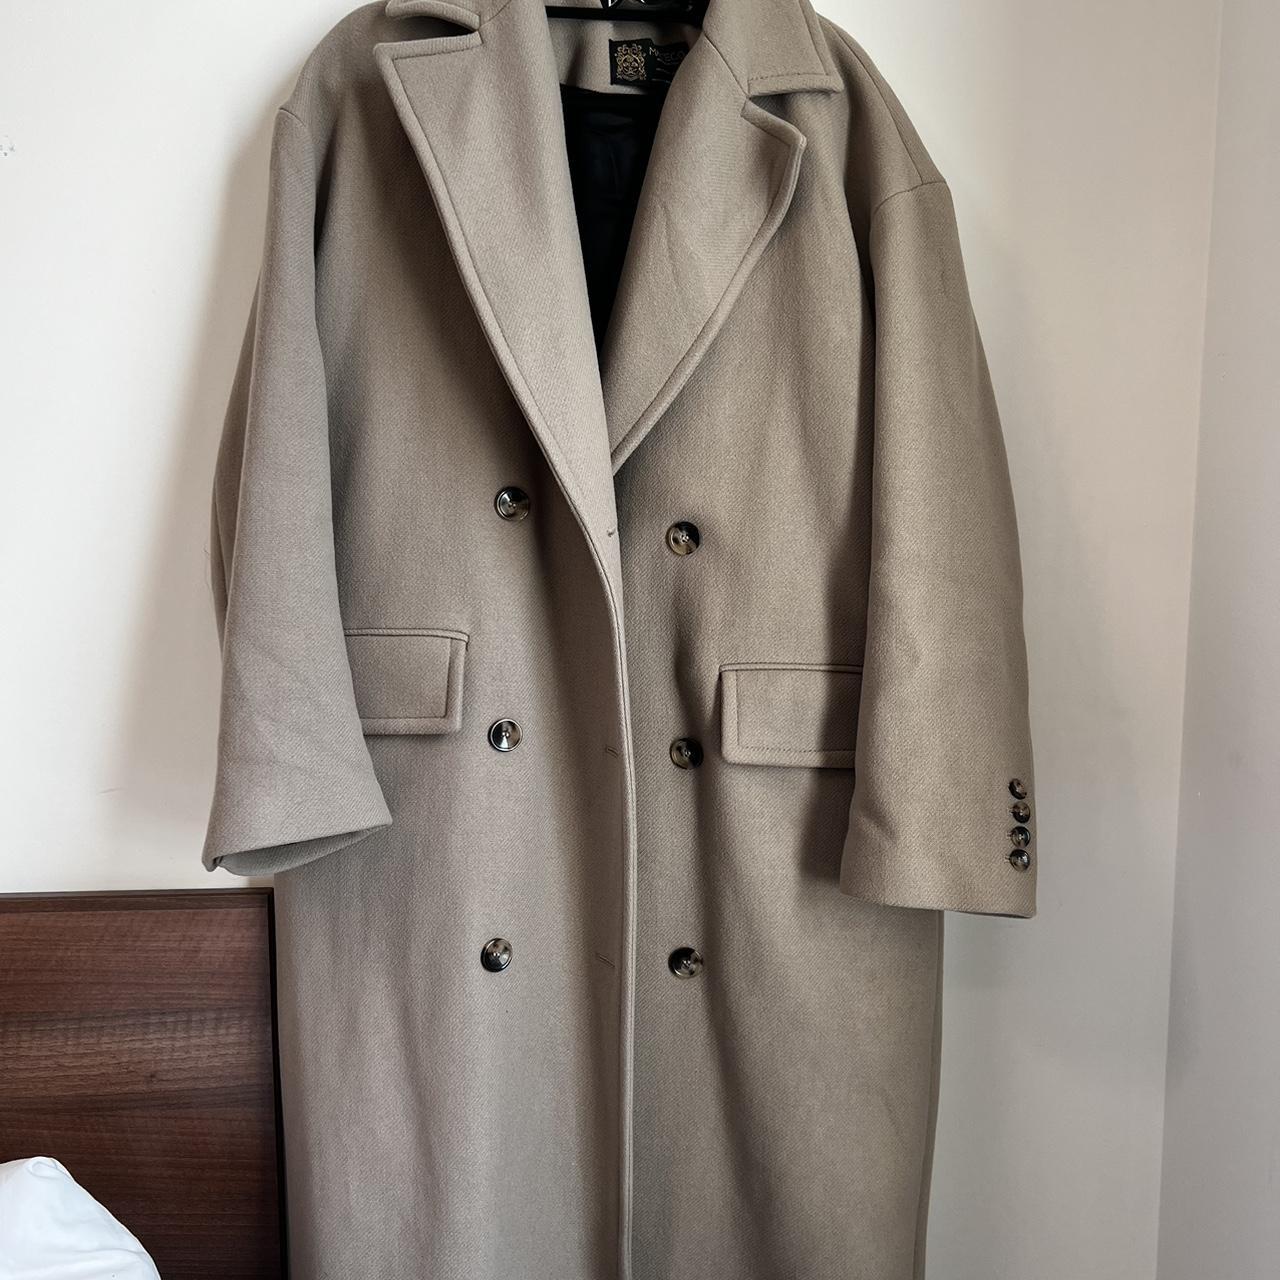 Zara manteco wool long coat in taupe grey RP 119... - Depop